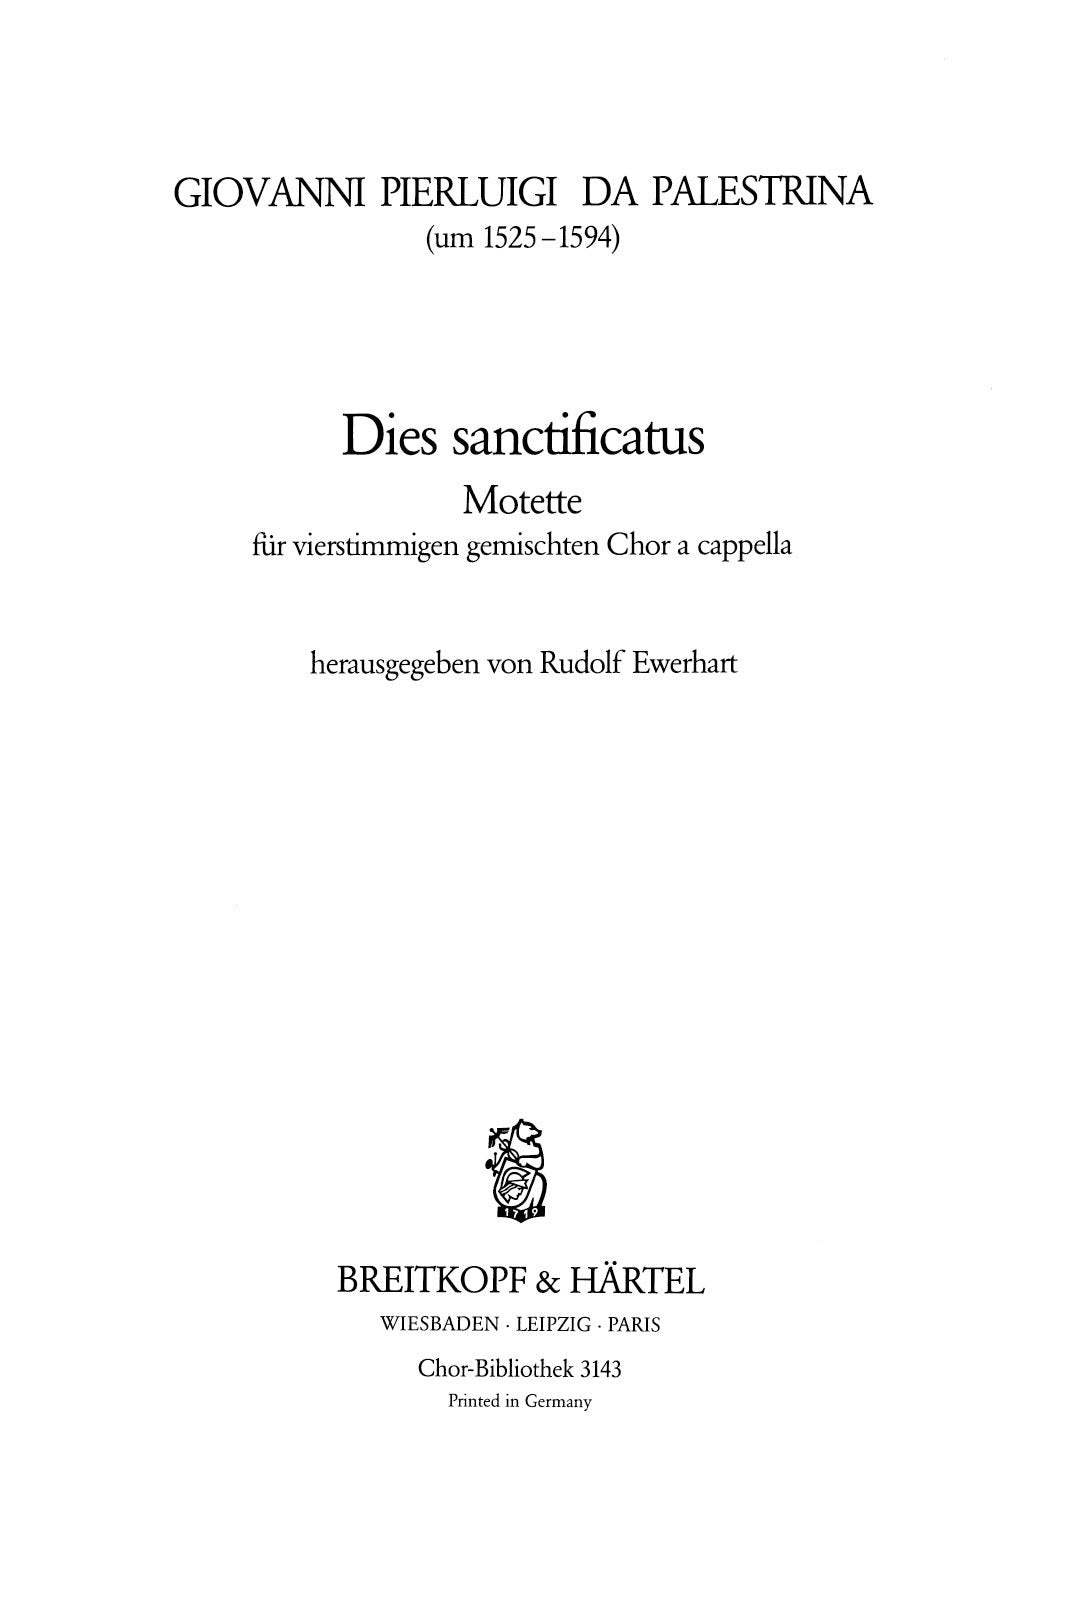 Palestrina: Dies sanctificatus